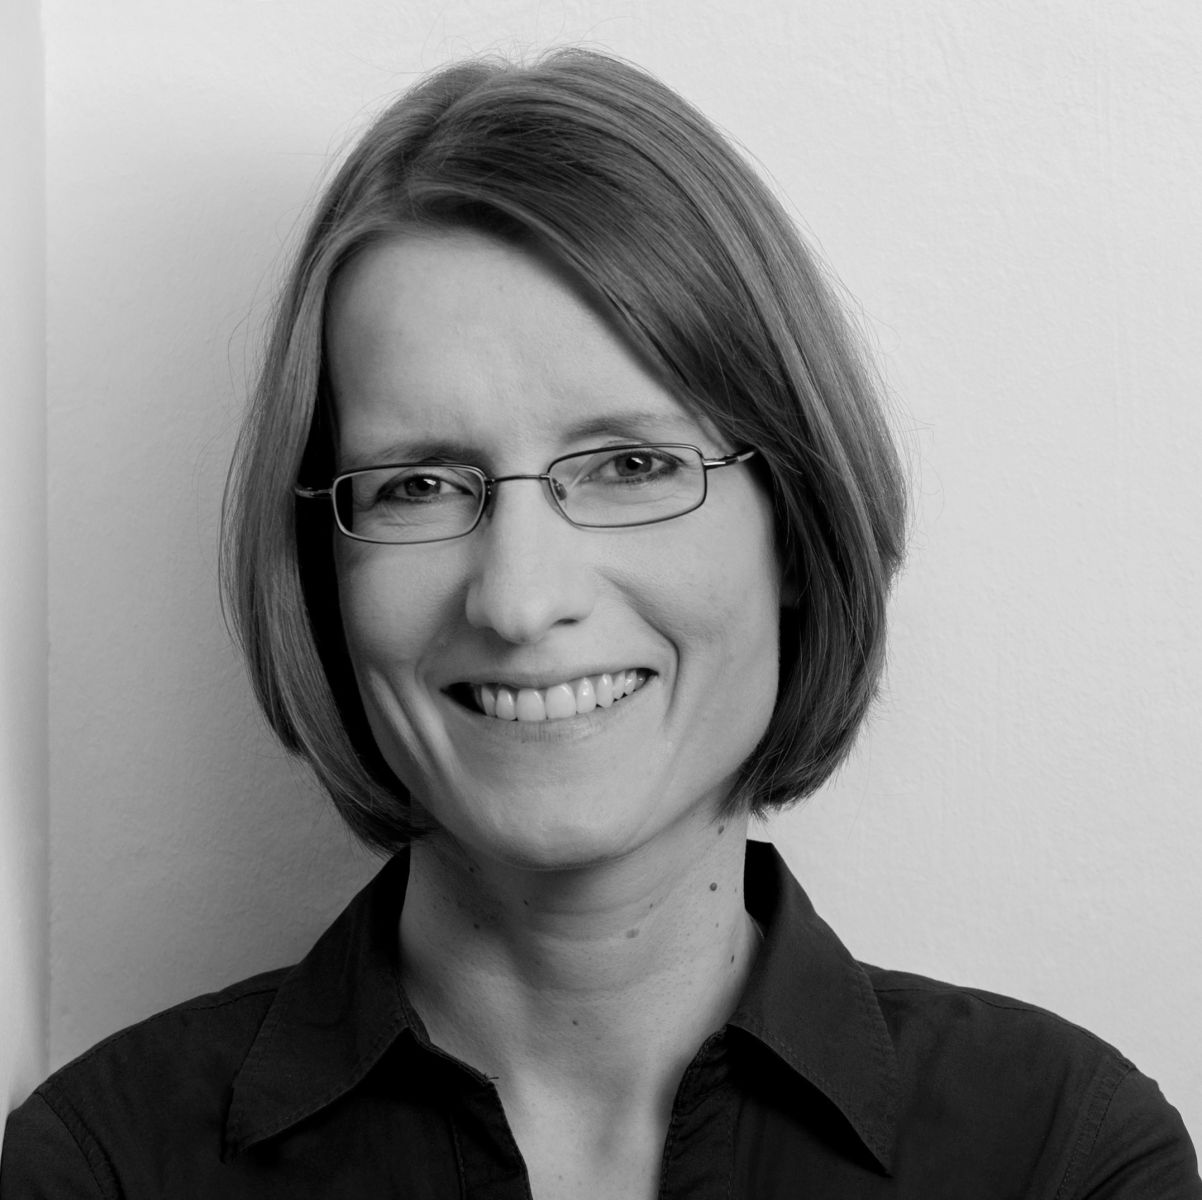 Tanja Grünter, ISC Conference Program Manager